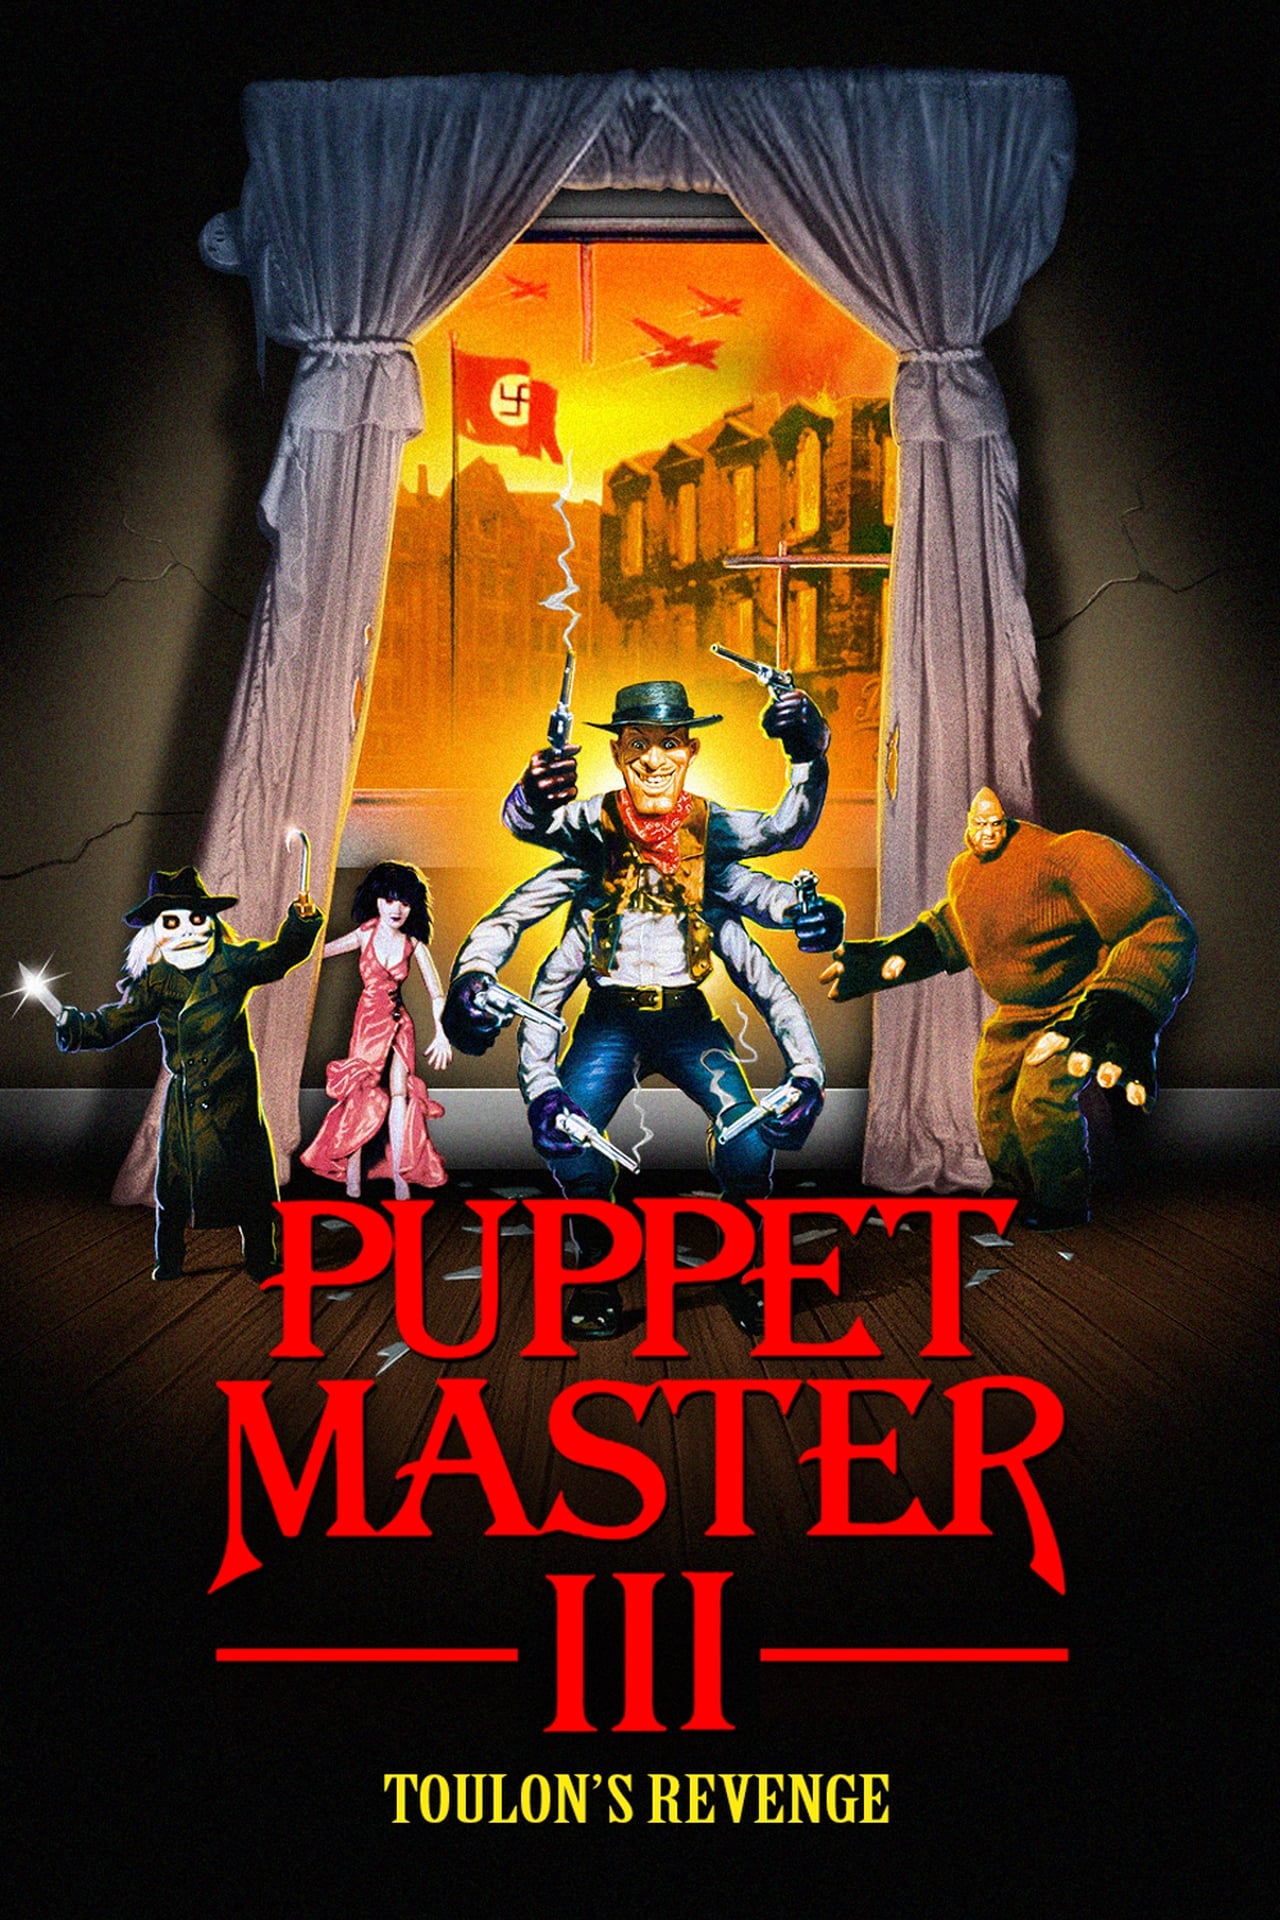 Puppet Master III: Toulon’s Revenge